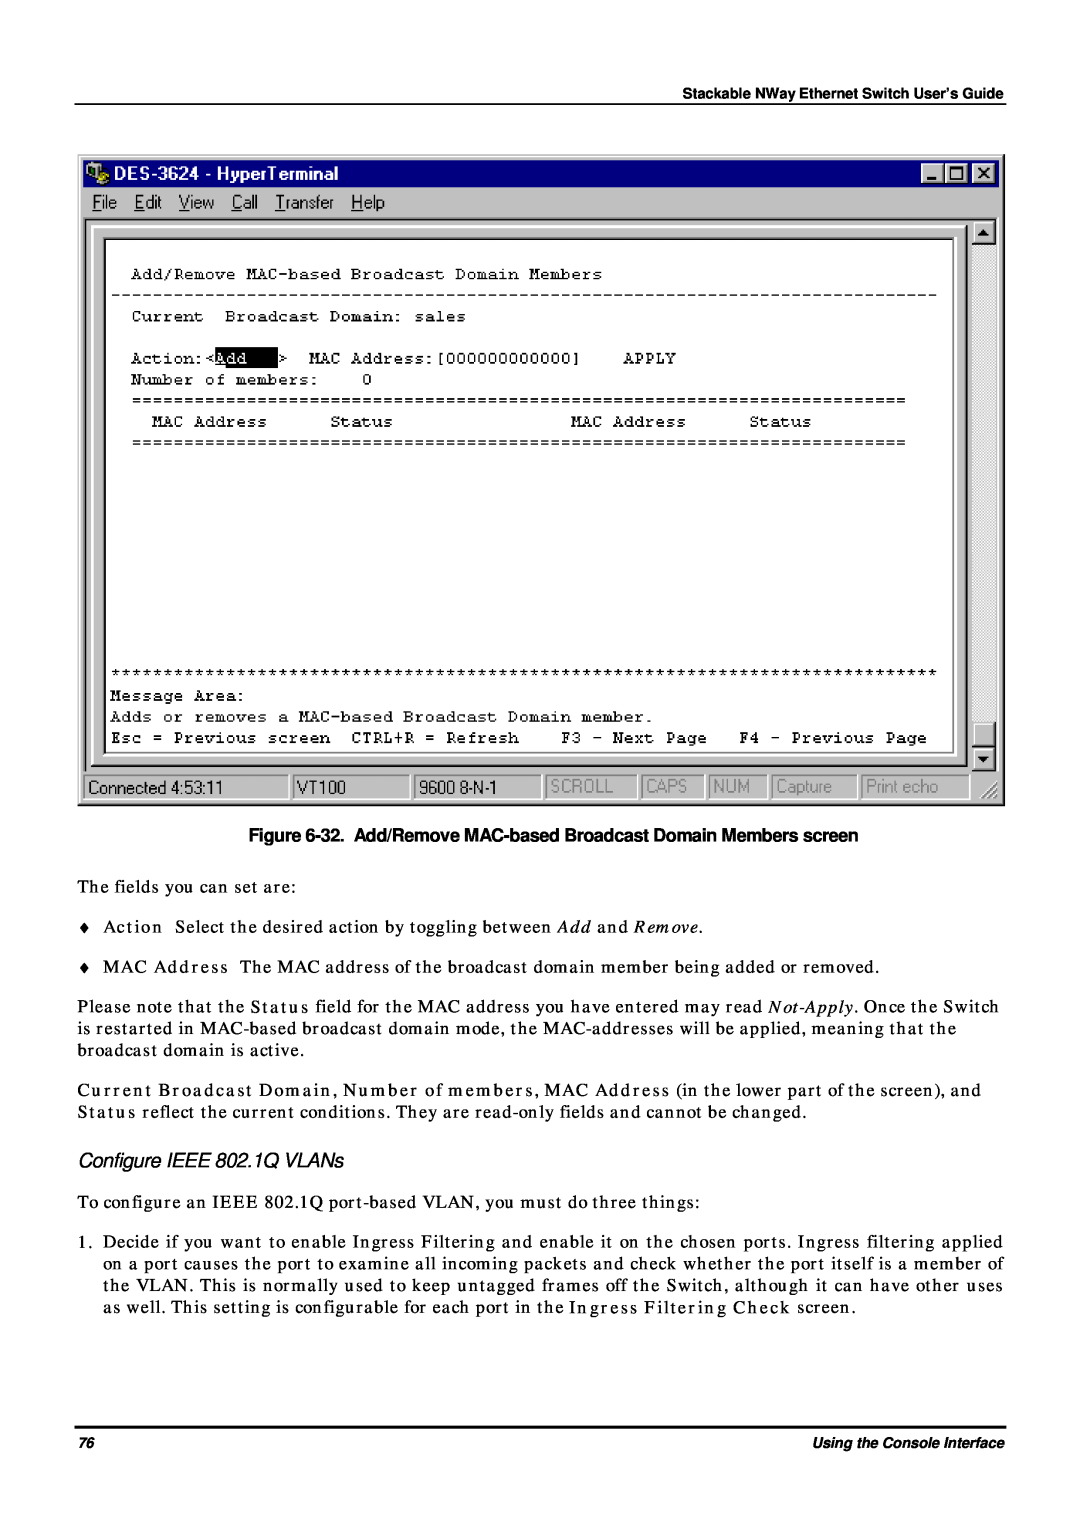 D-Link DES-3624 manual Configure IEEE 802.1Q VLANs, 32. Add/Remove MAC-based Broadcast Domain Members screen 